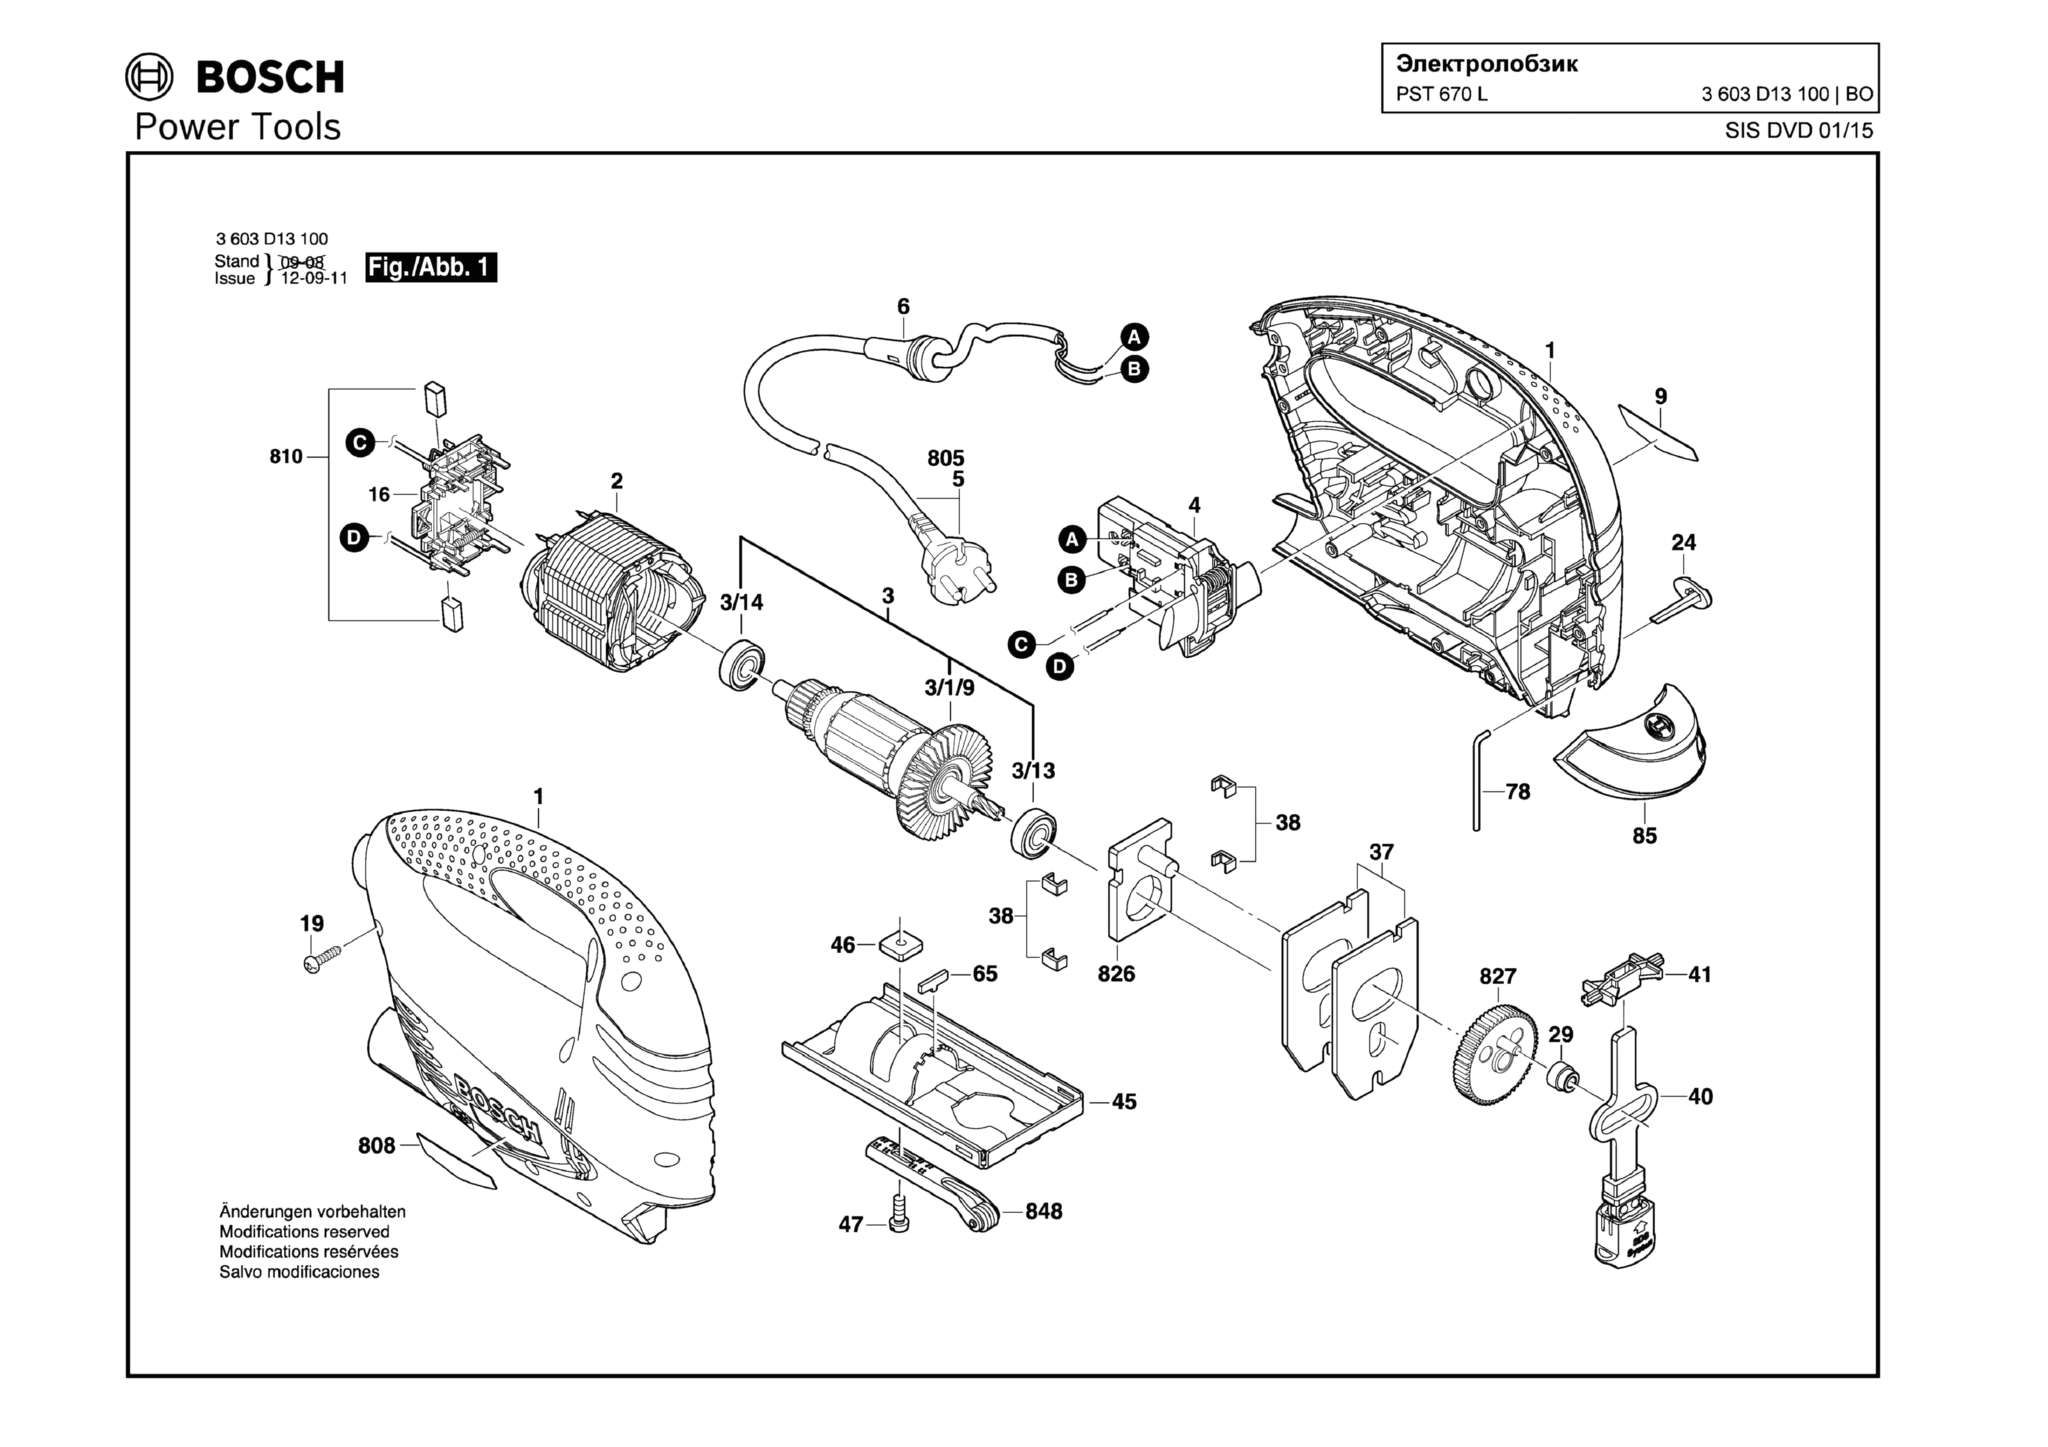 Запчасти, схема и деталировка Bosch PST 670 L (ТИП 3603D13100)